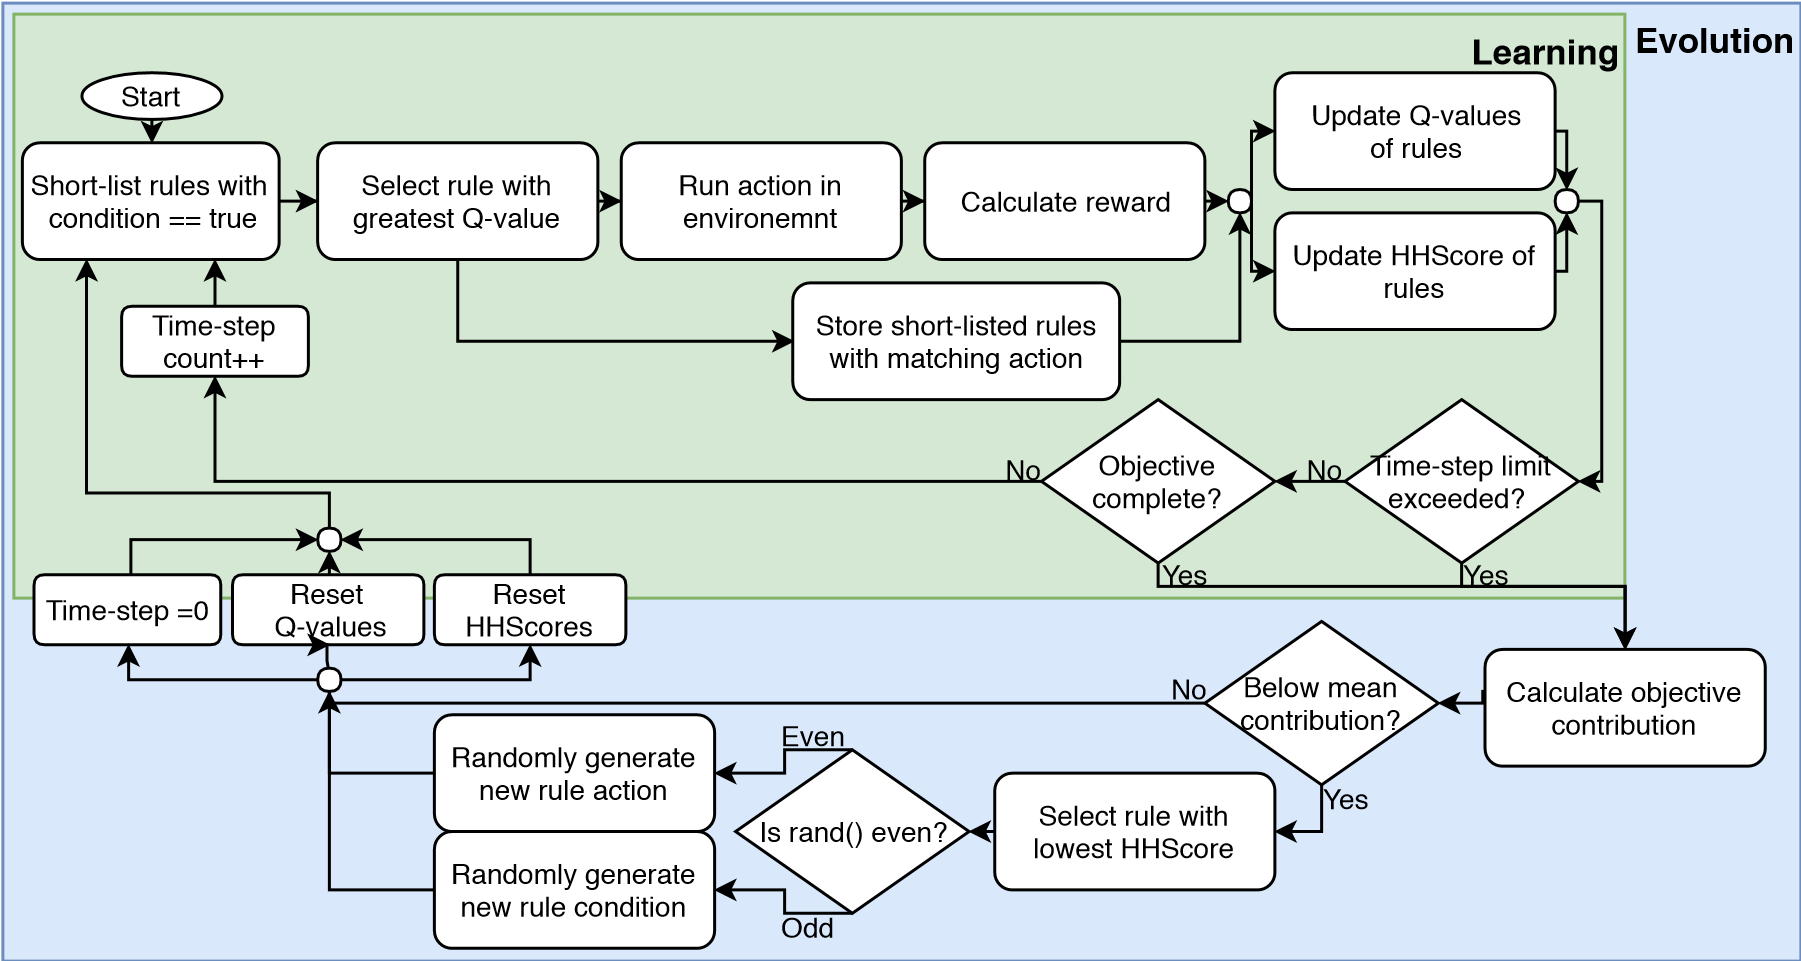 Figure 1. Flow diagram of both iterative processes